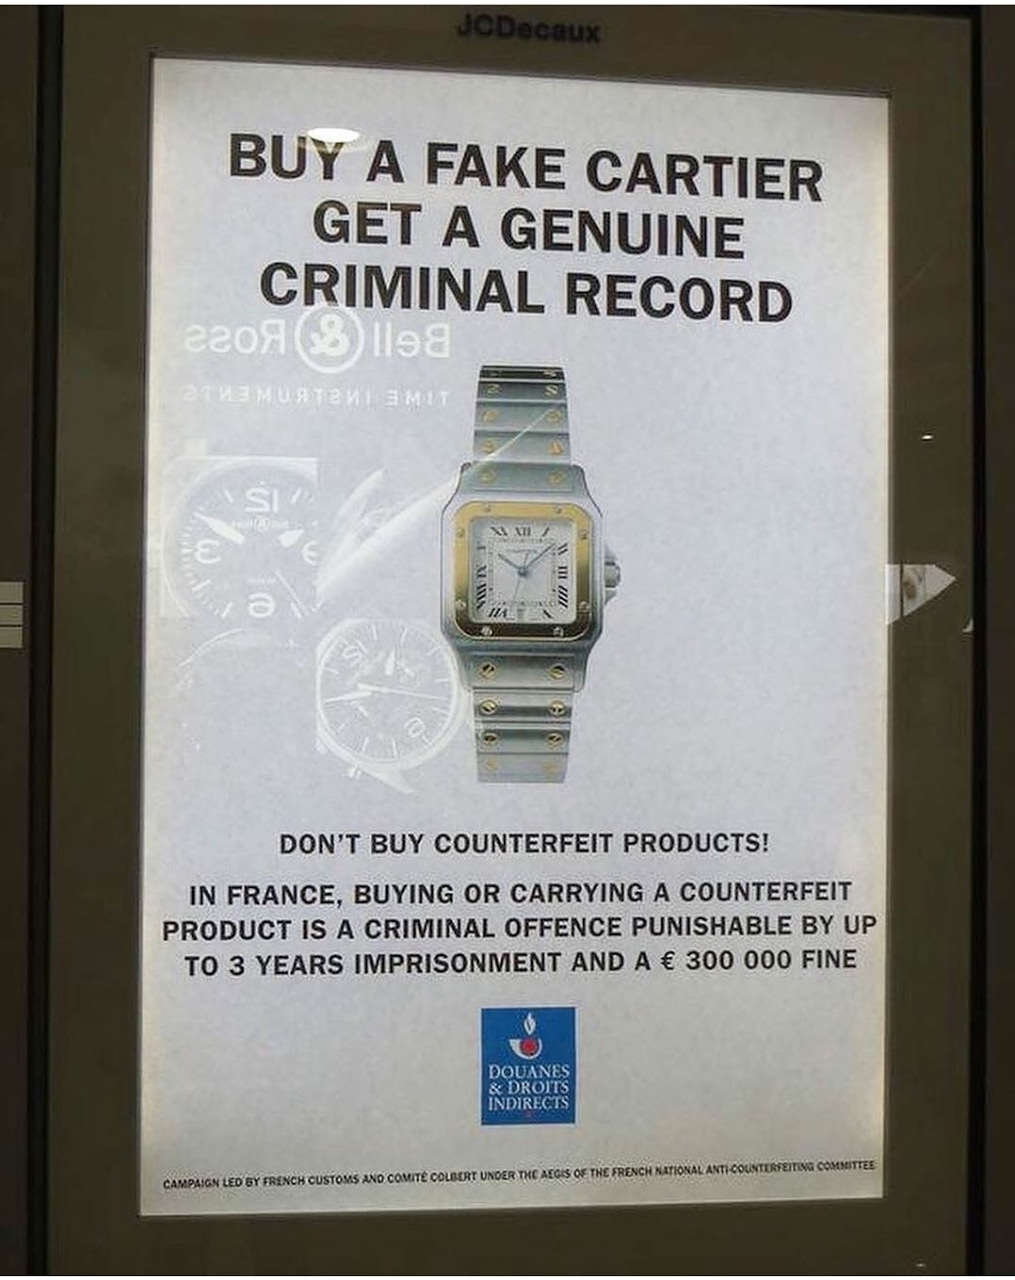 France's Draconian Counterfeit Customs Laws: Fake Handbag Laws & Risks